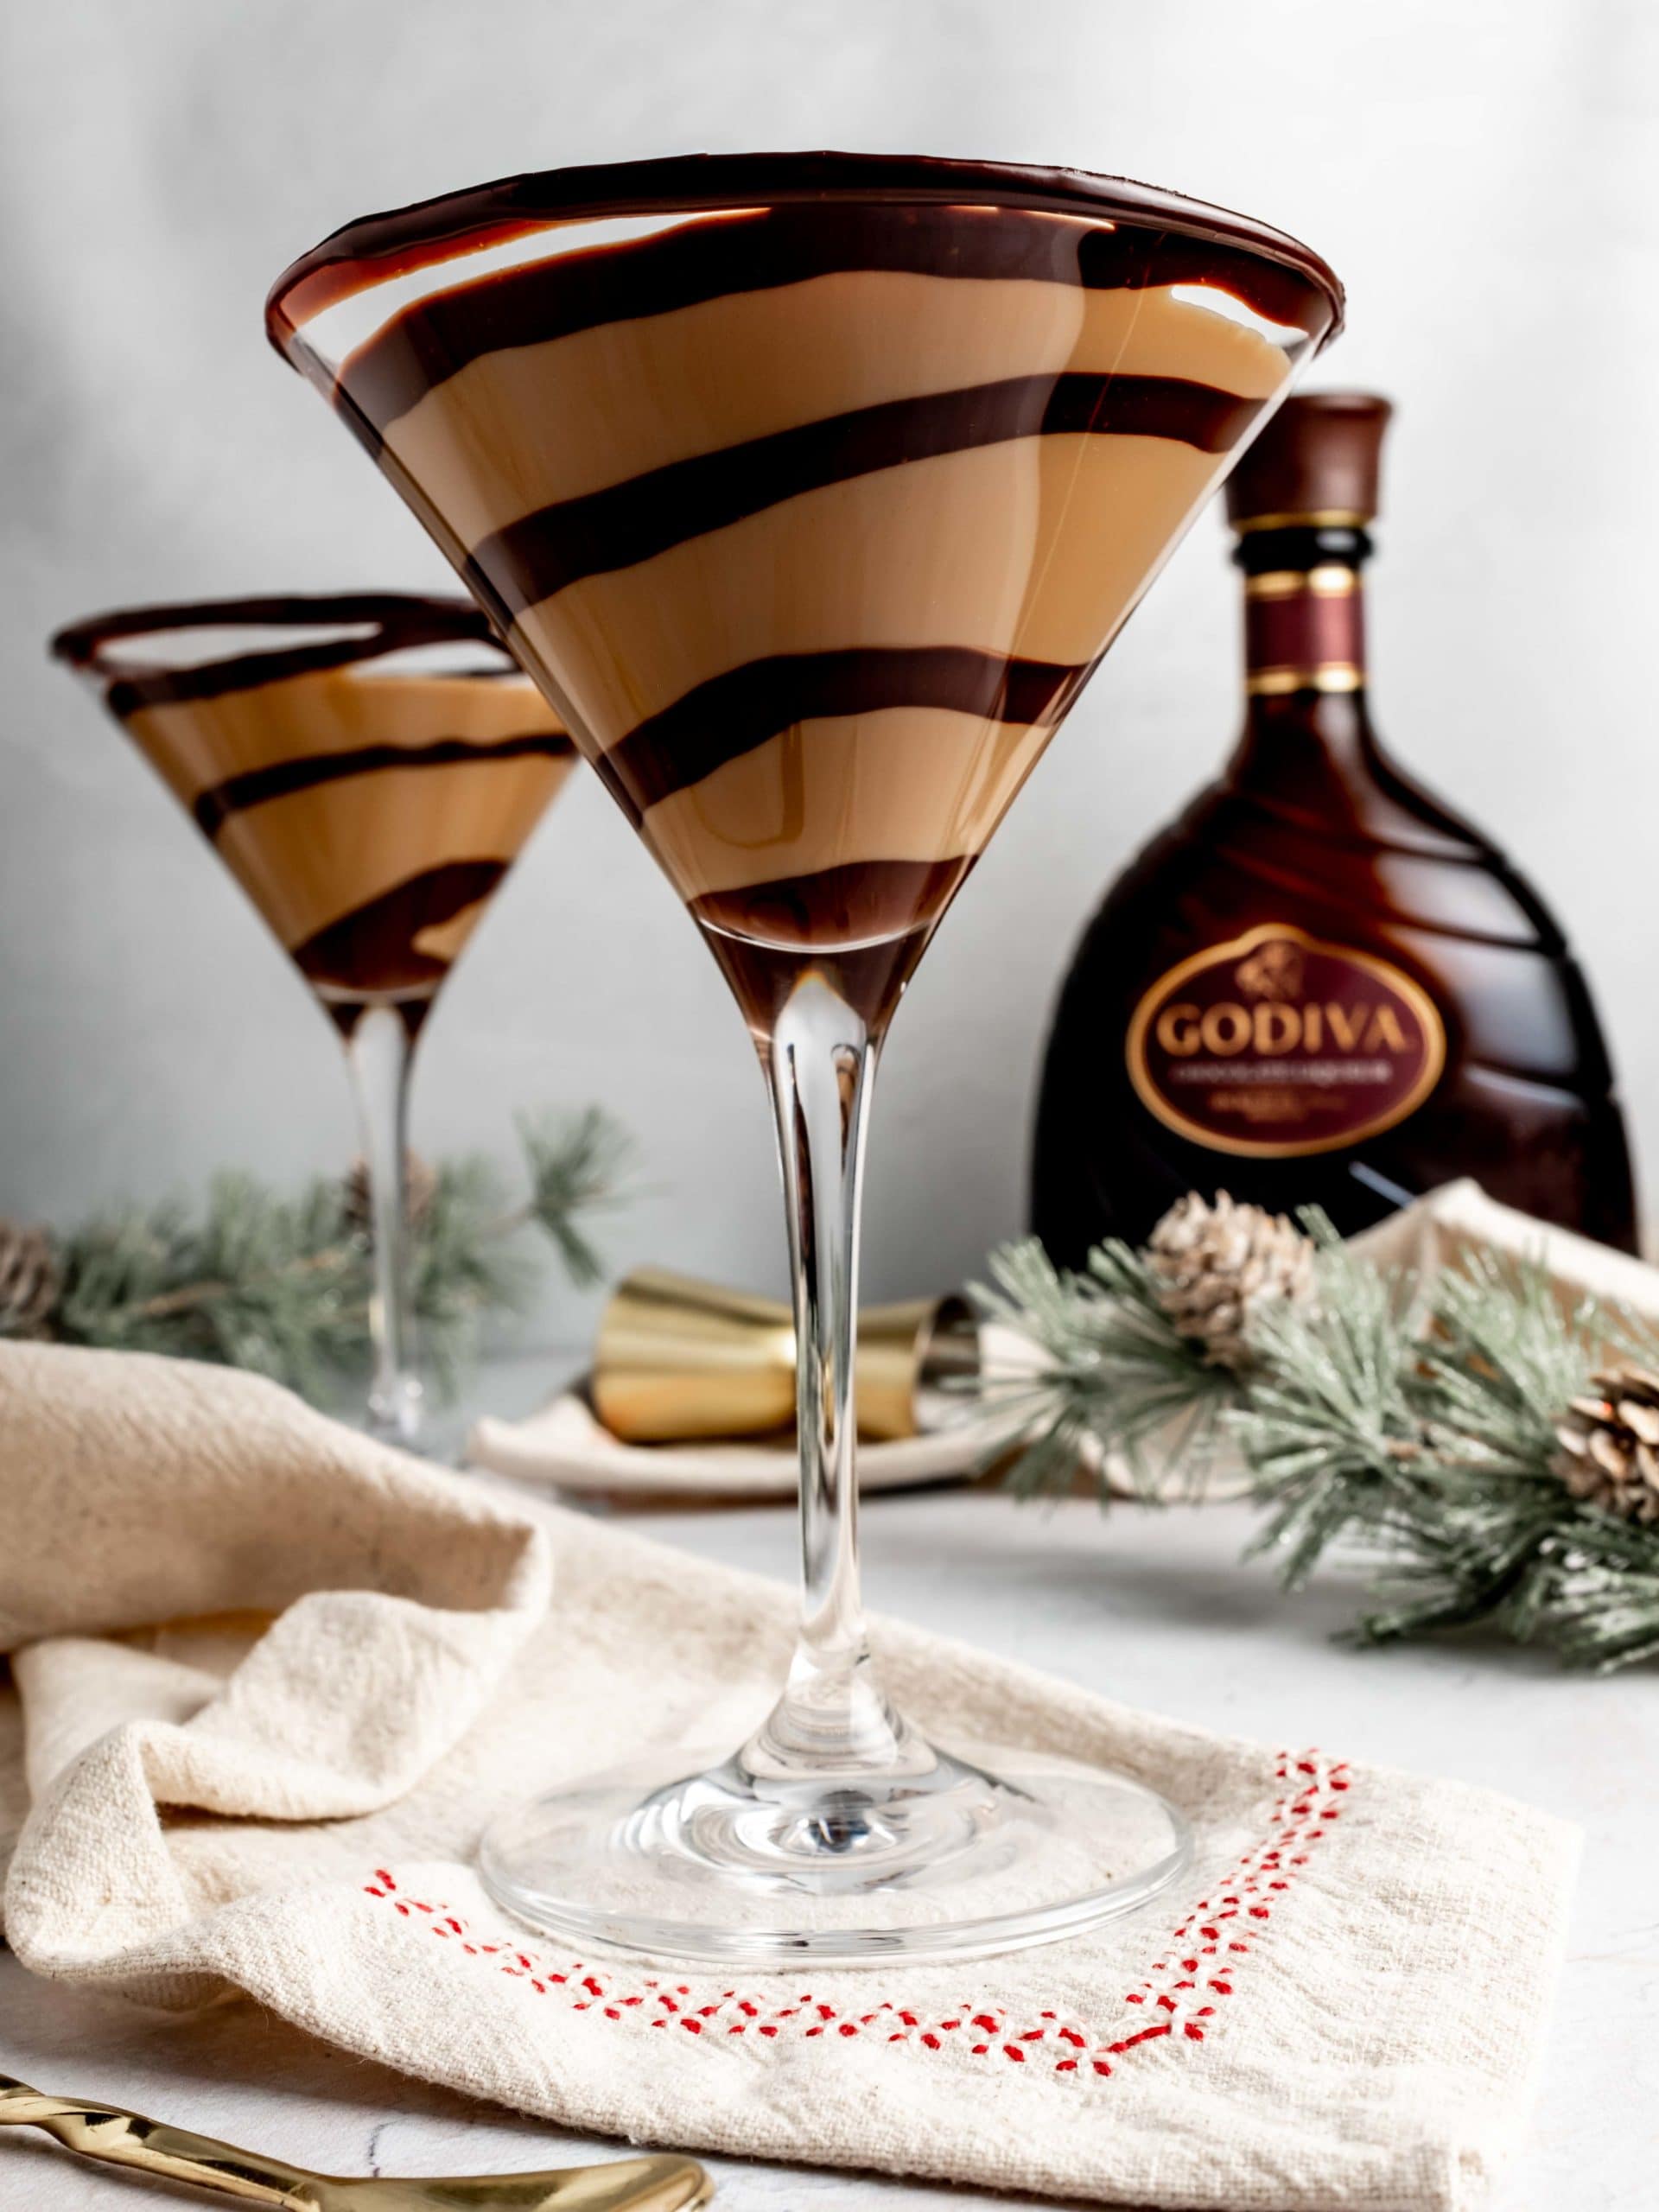 chocolate martini in glass with chocolate ganache